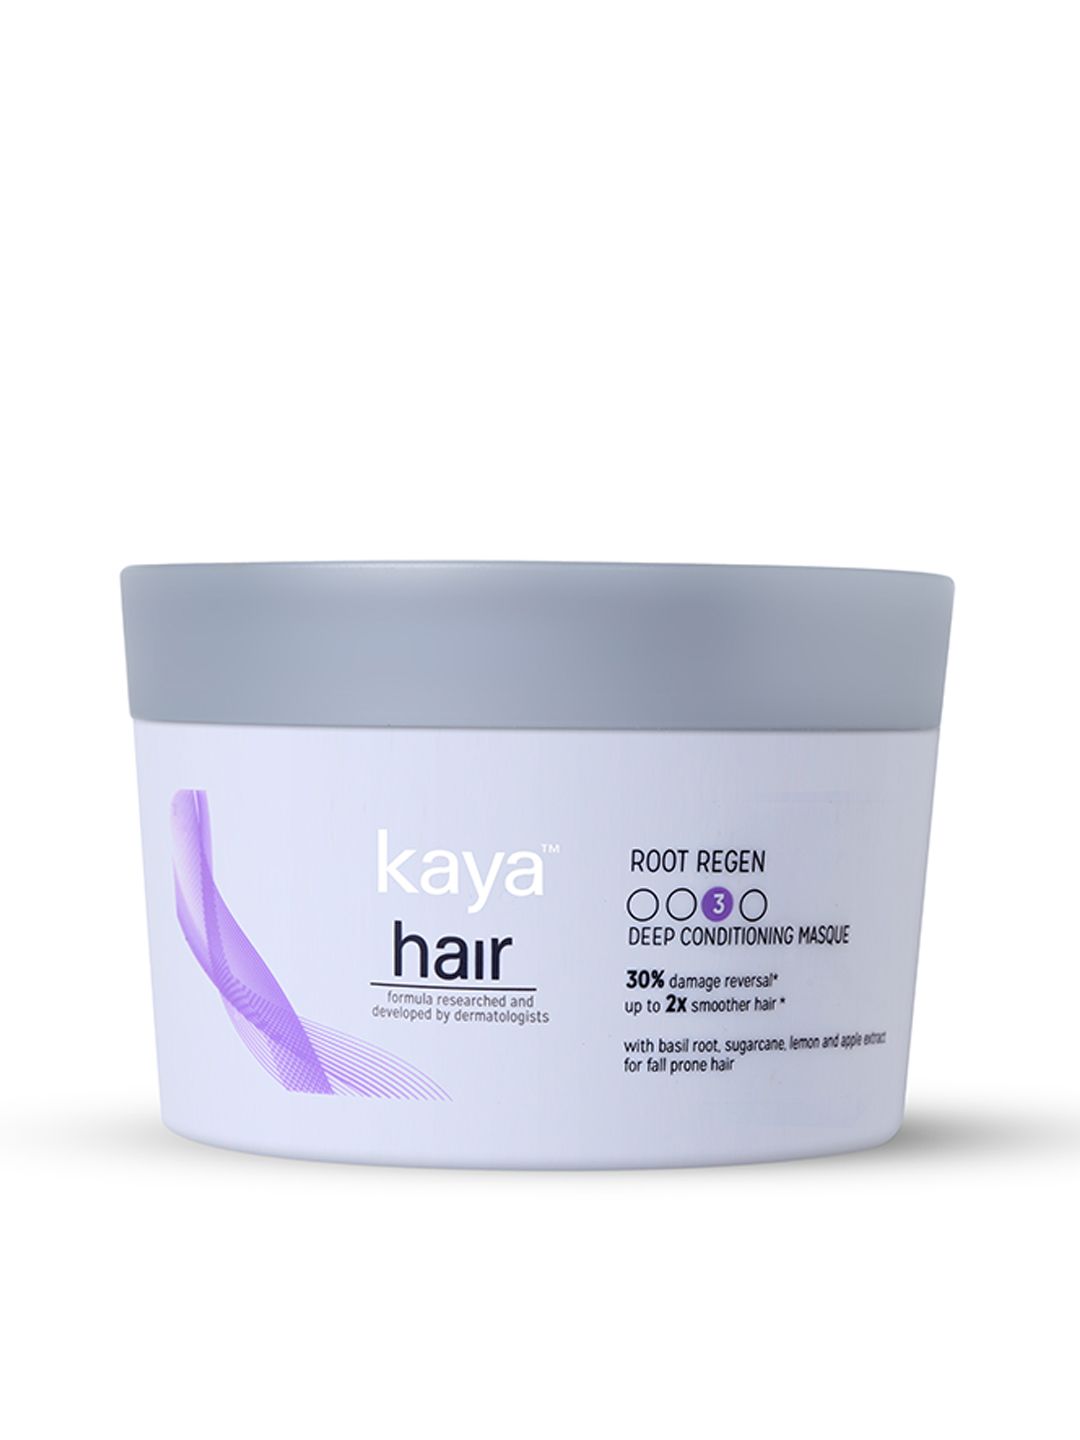 Kaya Root Regen Deep Hair Conditioning Masque - All Hair Types 200g Price in India